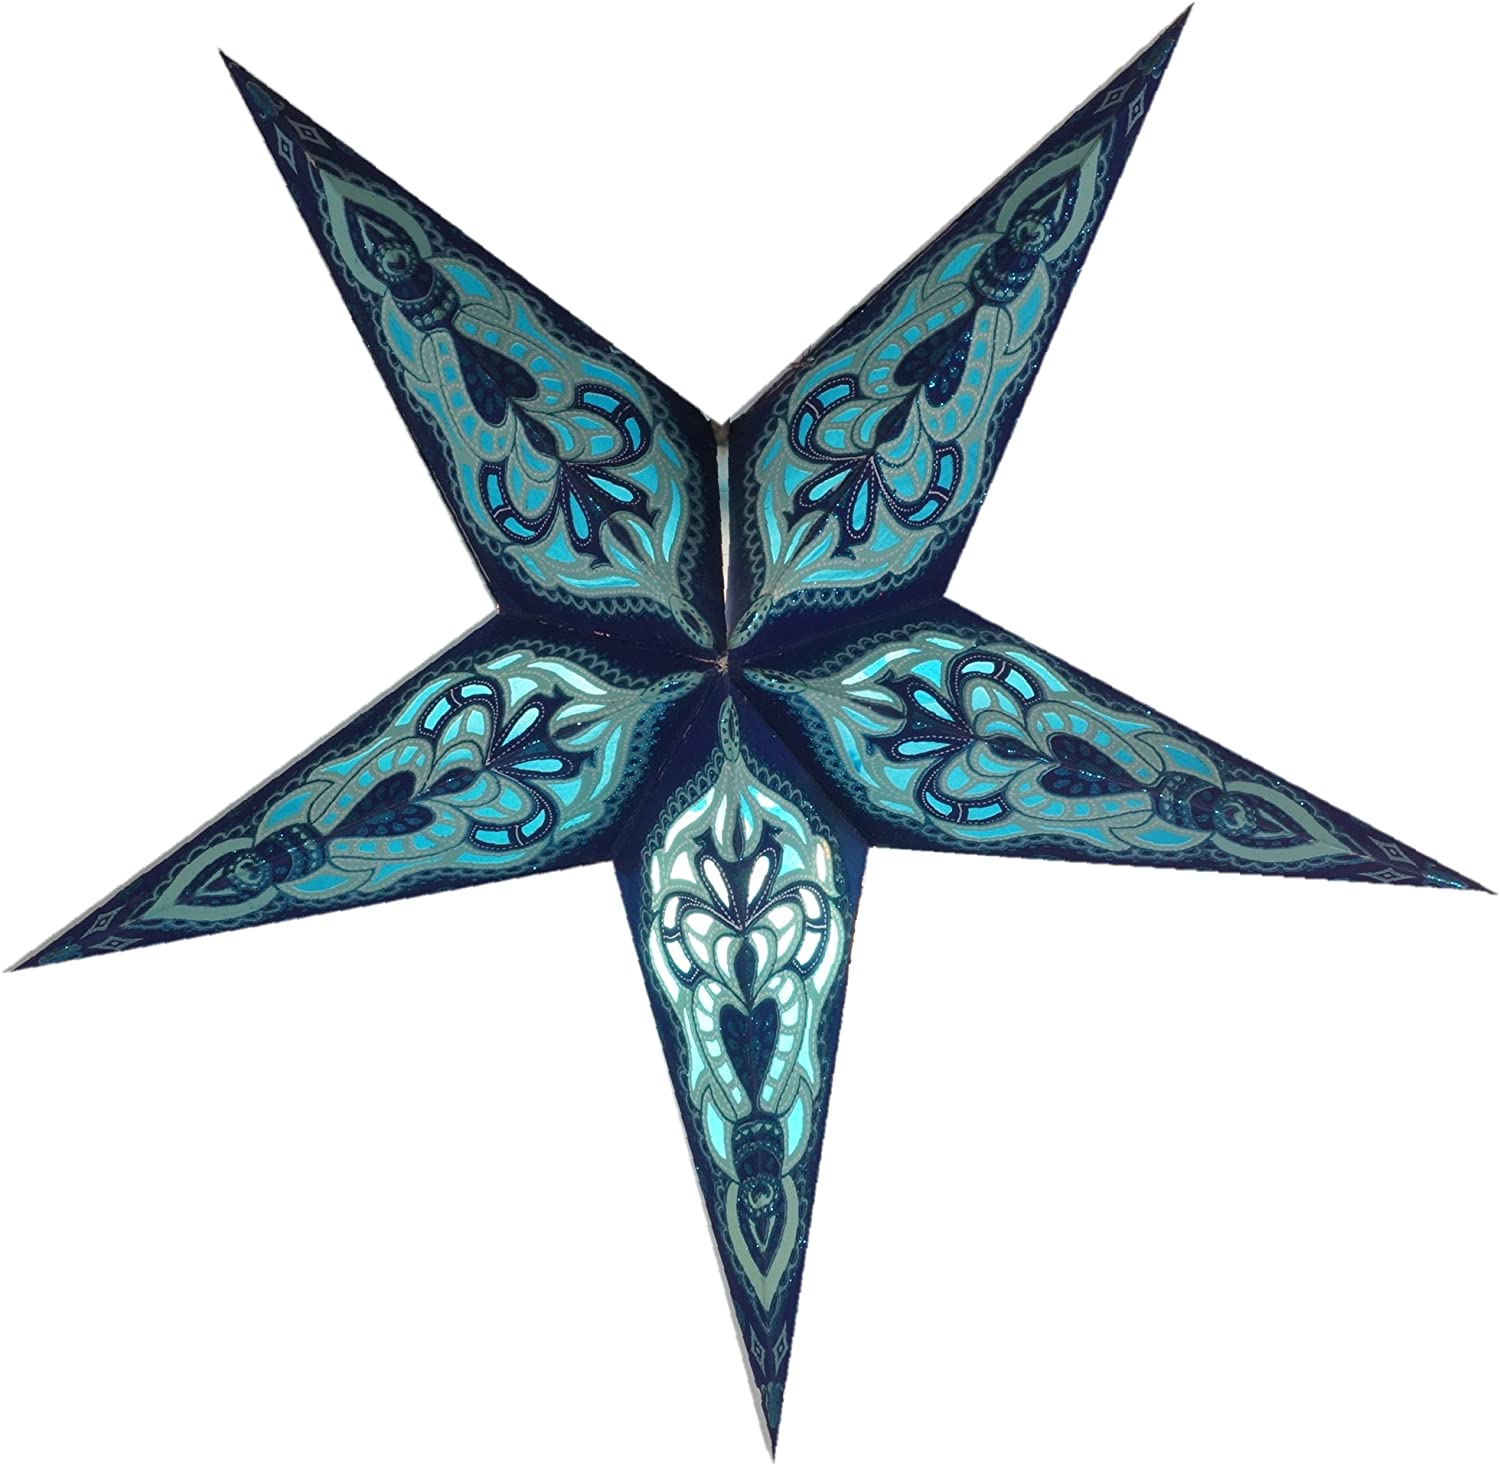 Guru-Shop Foldable Advent Light Paper Star Christmas Star Anubis Red Star Window Decoration 5 Tips